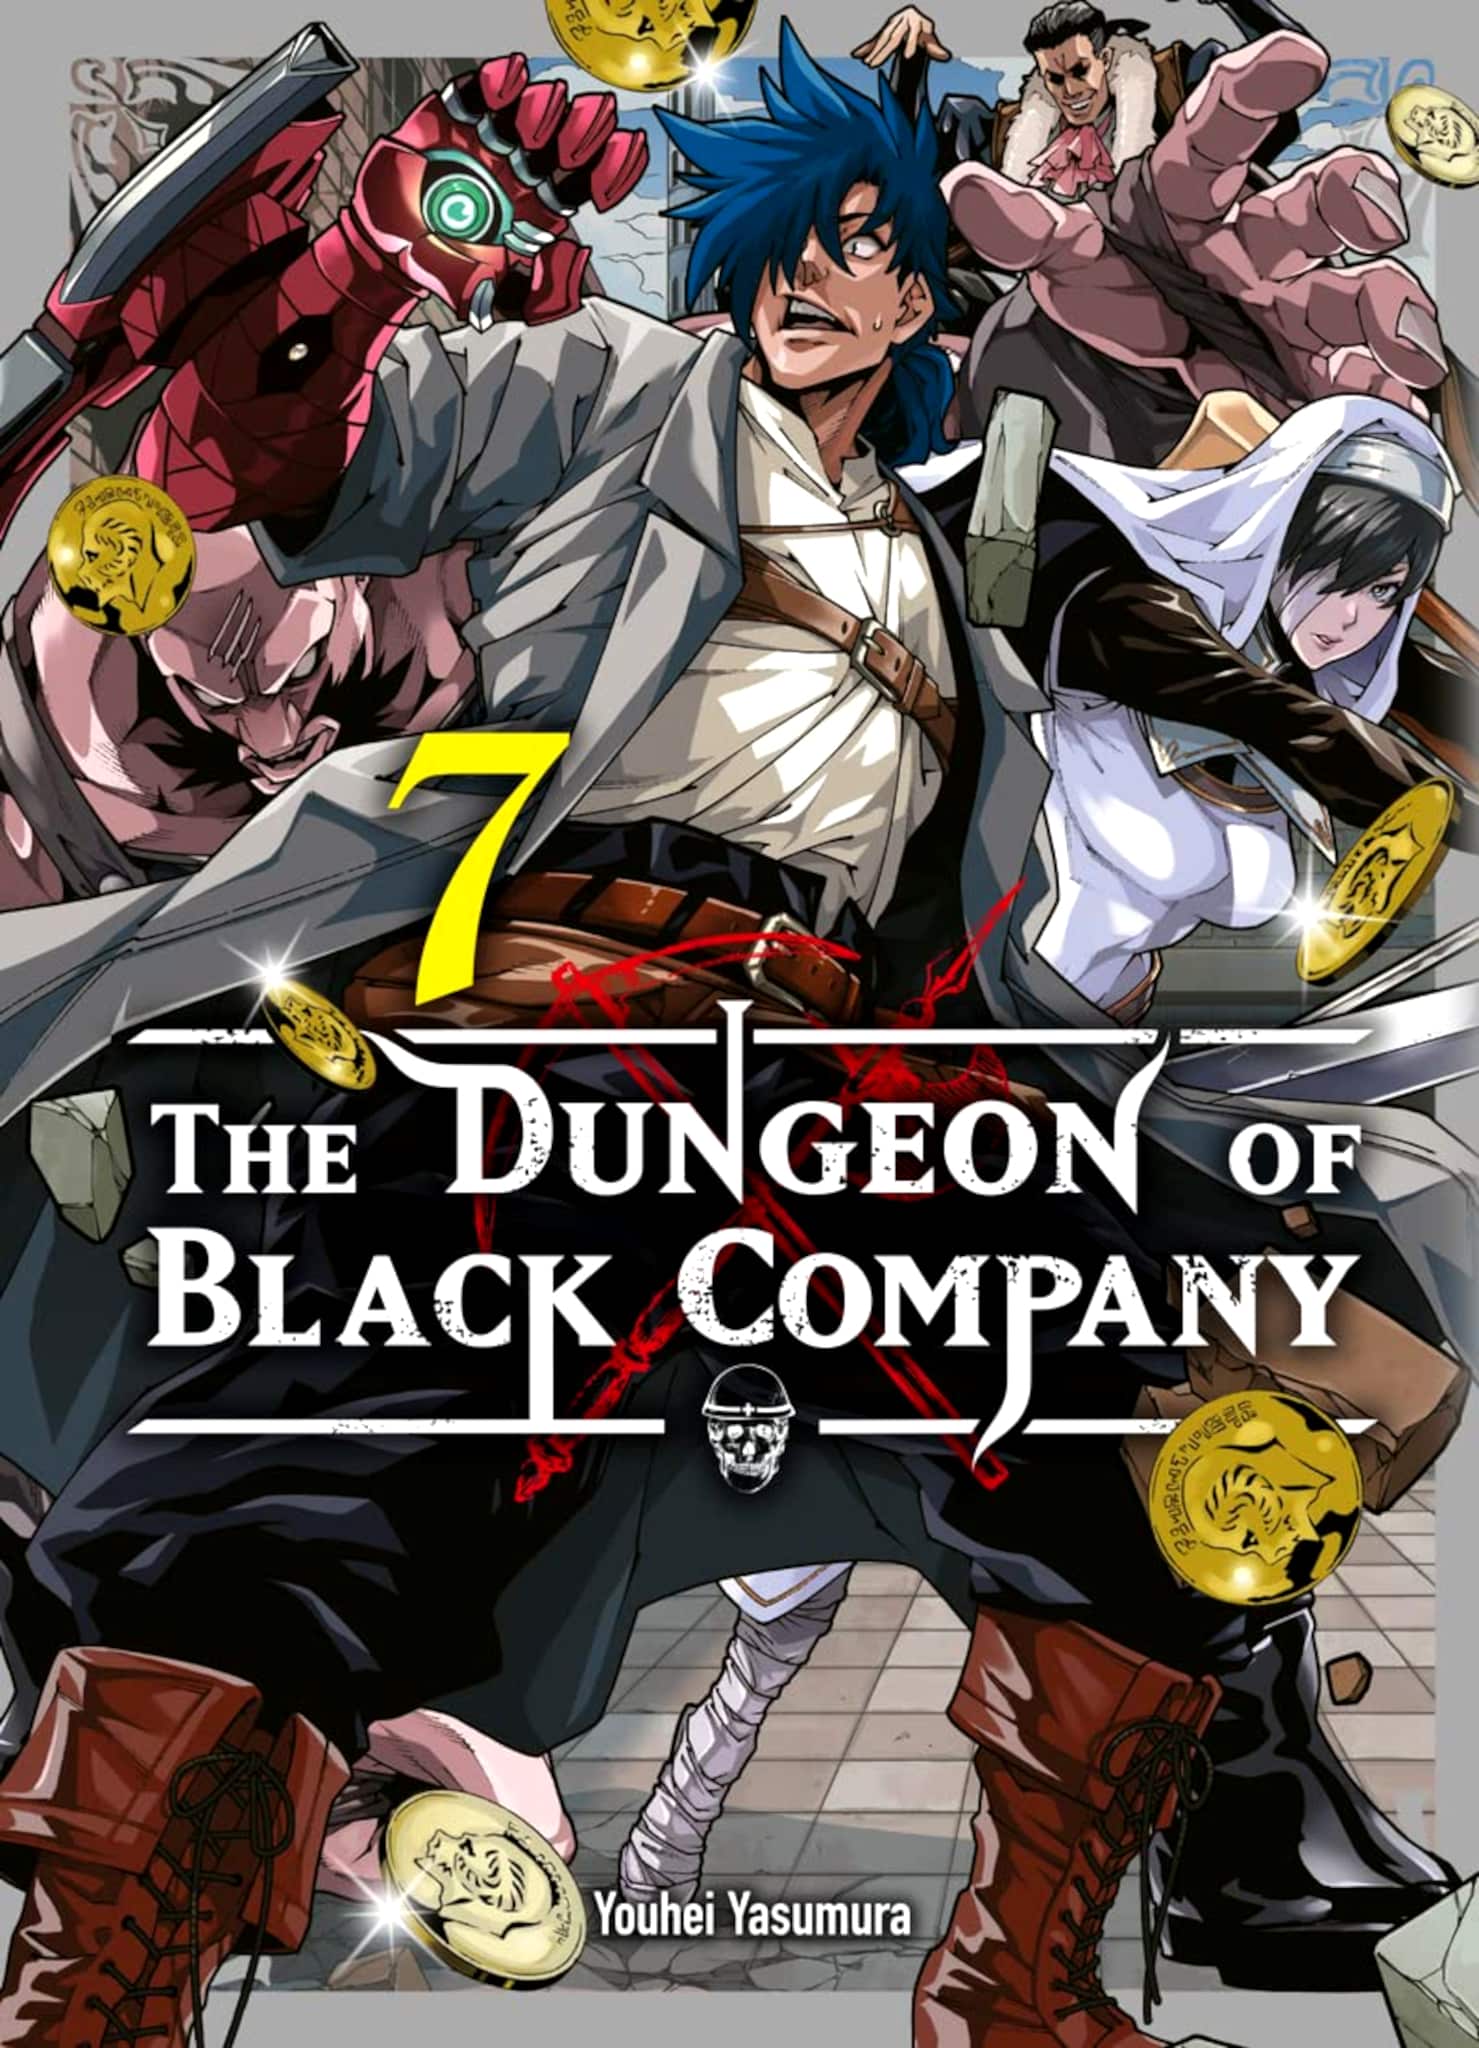 The Dungeon of Black Company (anime) - AnimOtaku